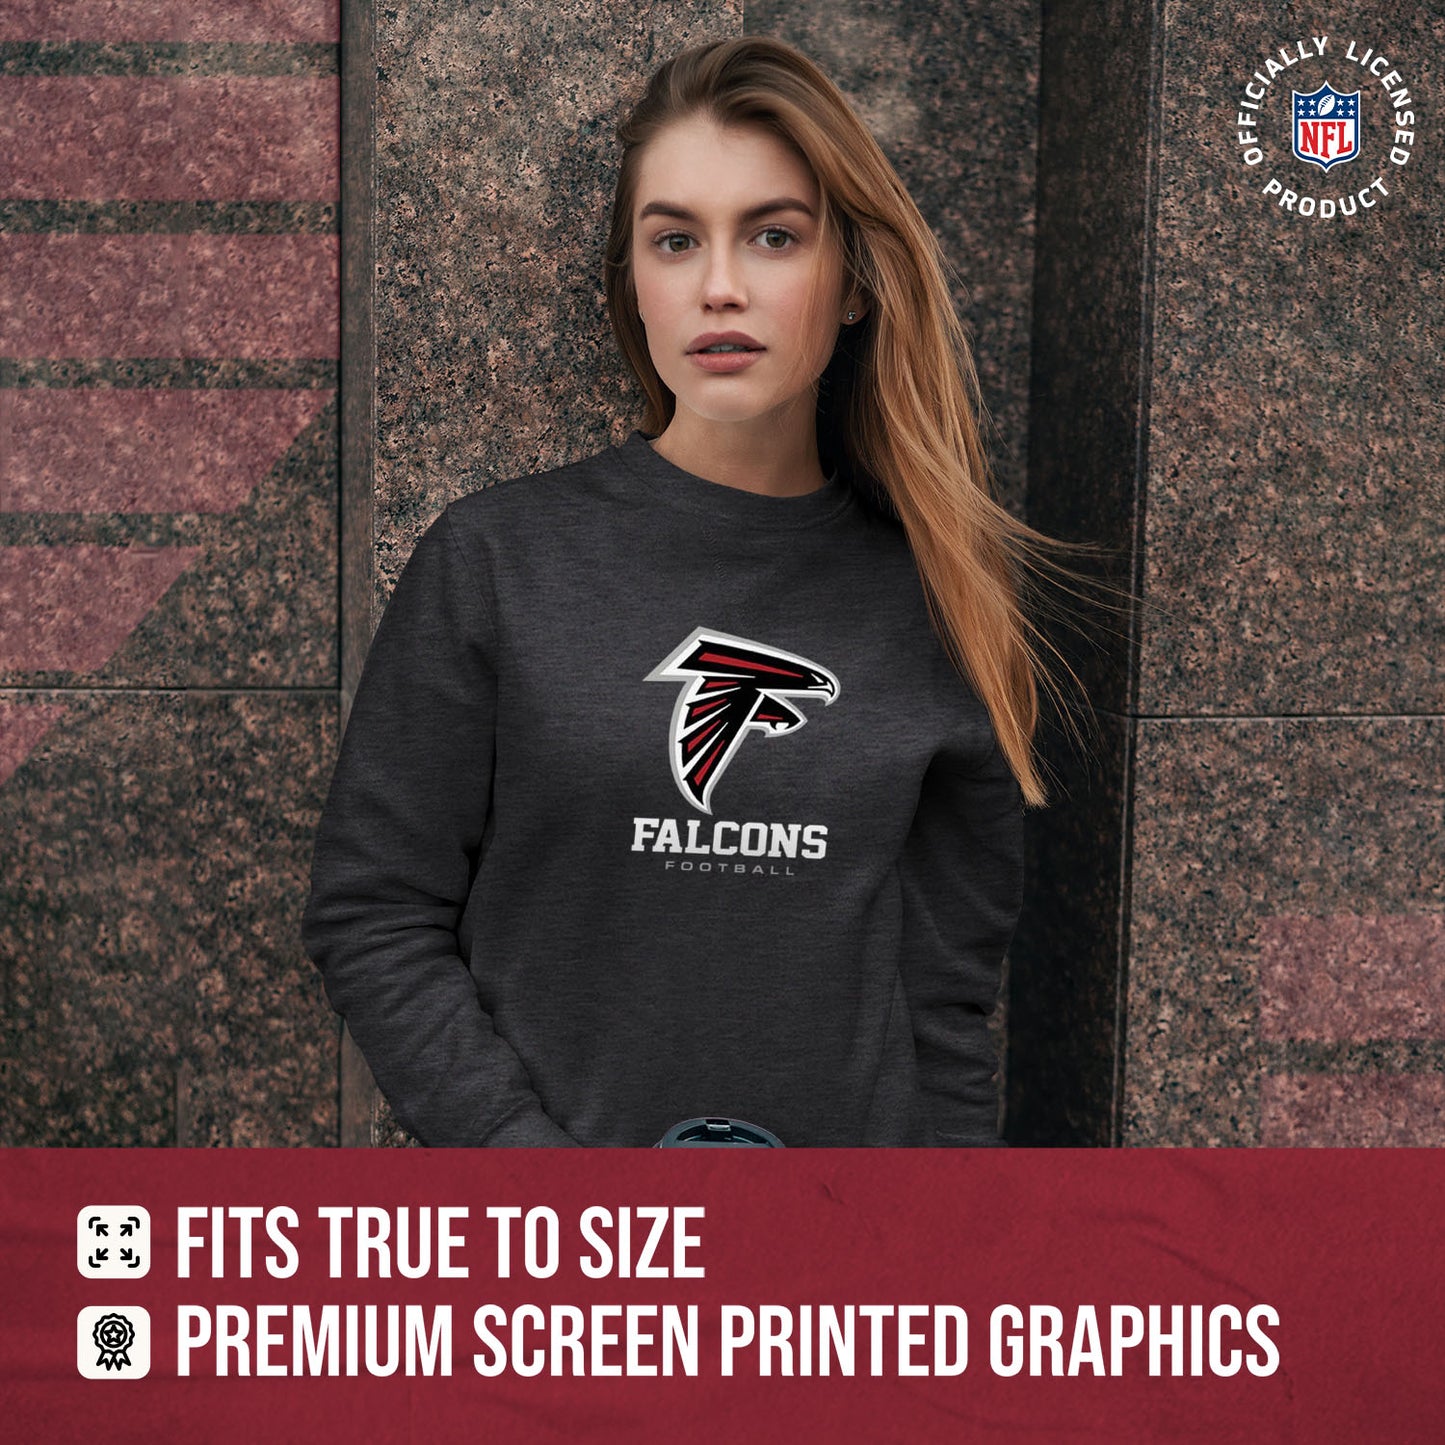 Atlanta Falcons Women's NFL Ultimate Fan Logo Slouchy Crewneck -Tagless Fleece Lightweight Pullover - Charcoal